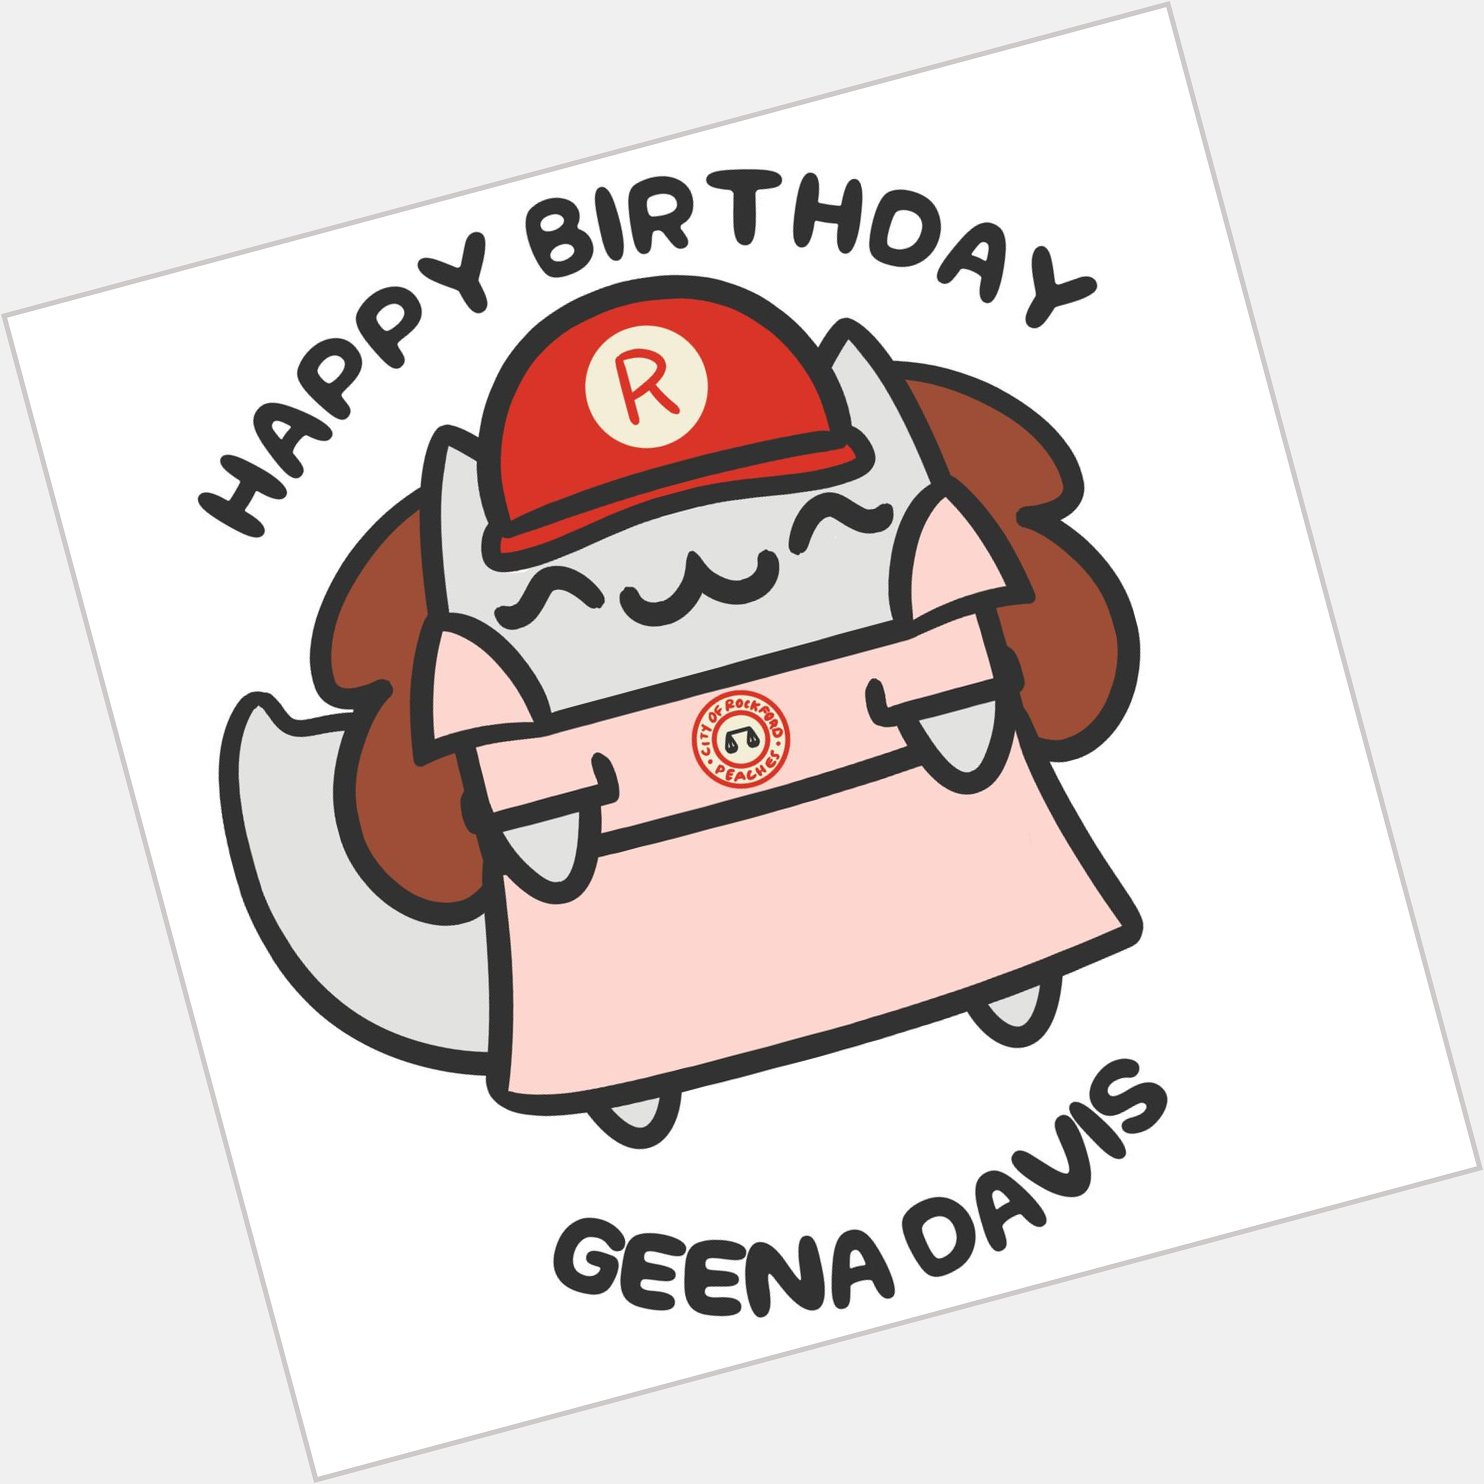 Happy Birthday, Geena Davis!  